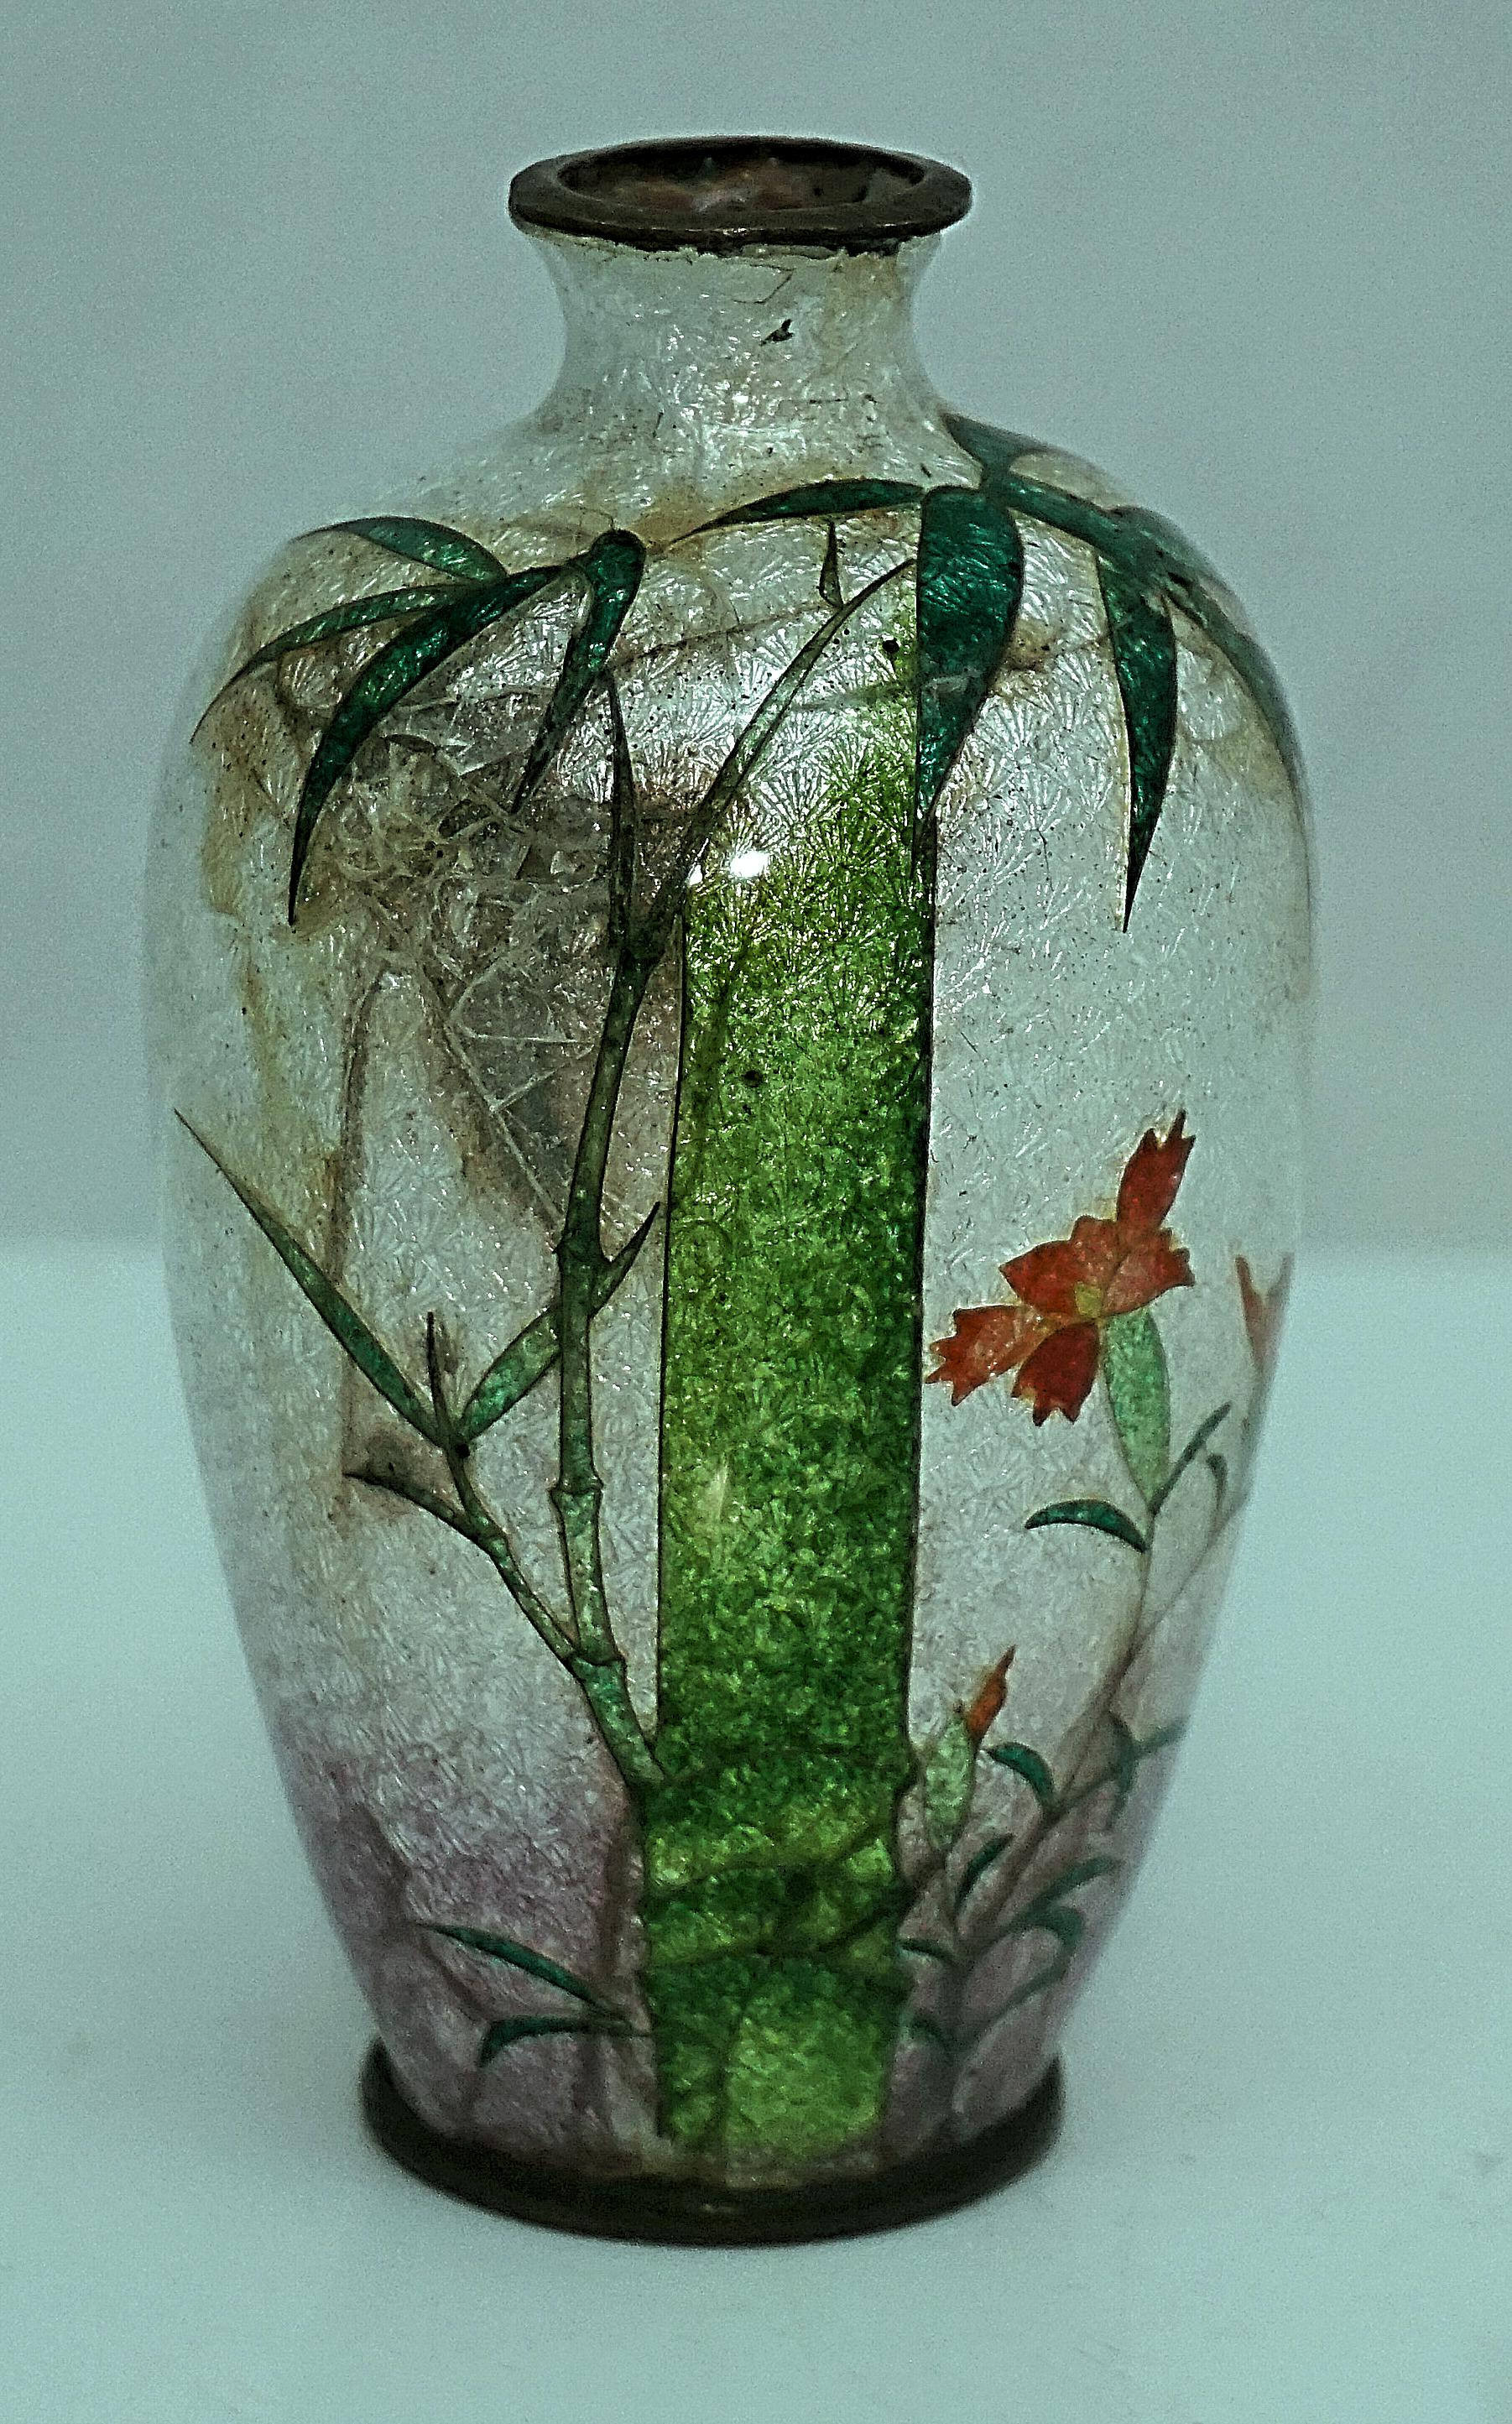 16 Recommended Satsuma China Vase 2024 free download satsuma china vase of japanese cloisonne meiji period silver coloured small vase a etsy regarding dc29fc294c28ezoom